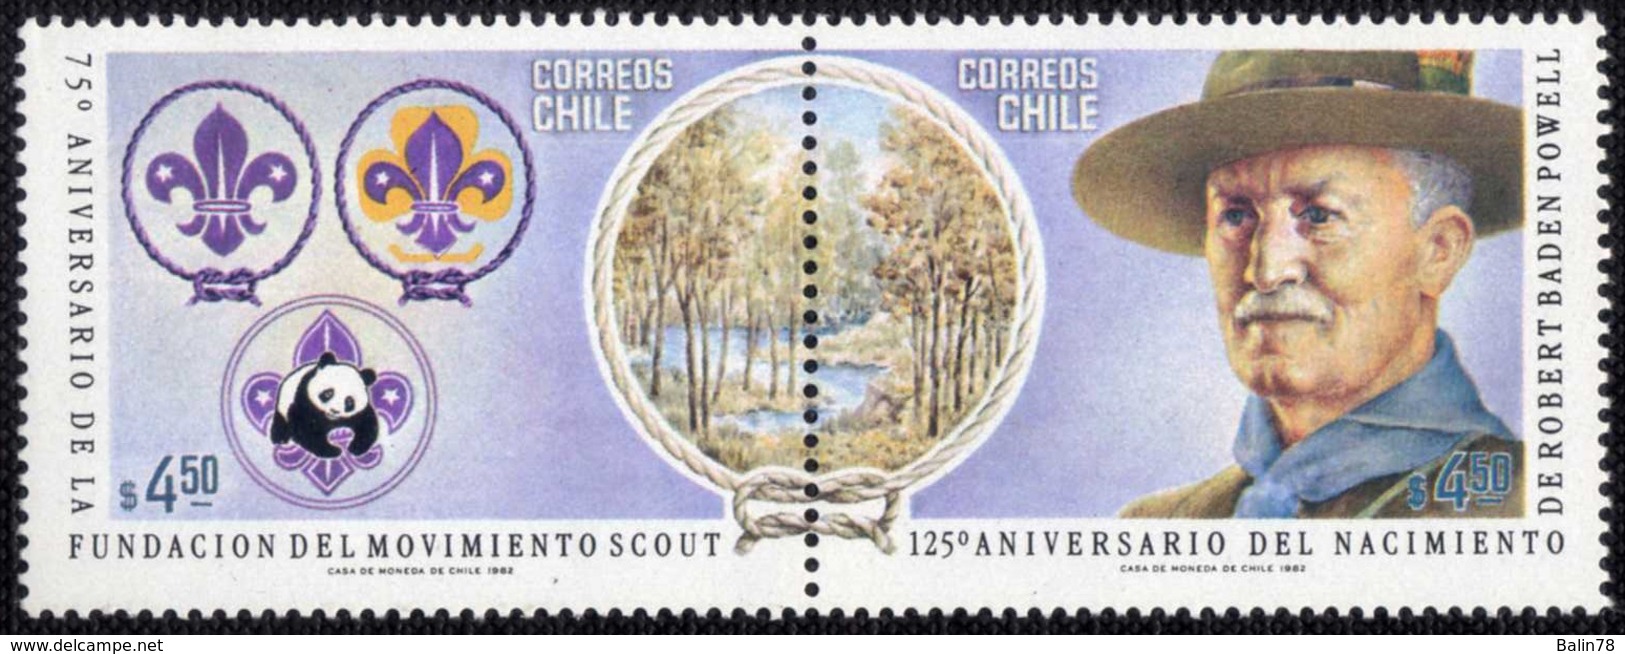 1982 - Chile - Sc. 623 - MNH - Chile